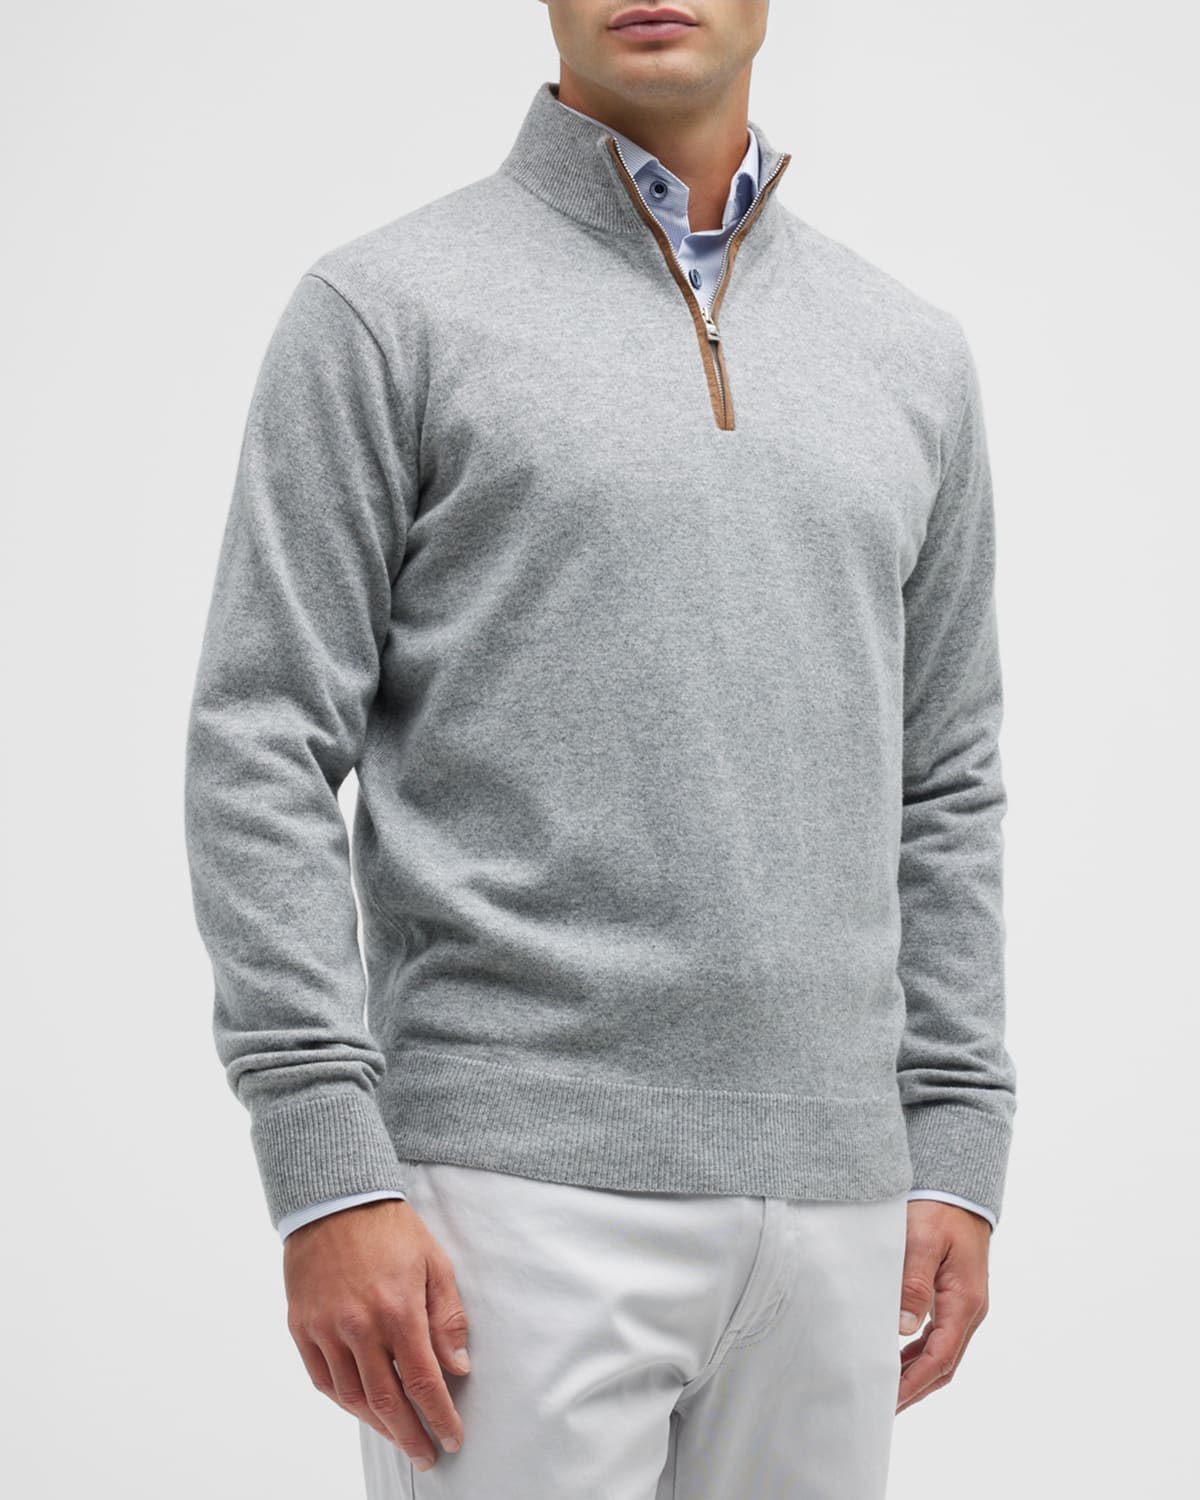 Peter Millar Men's Stretch Cashmere Quarter-Zip Sweater